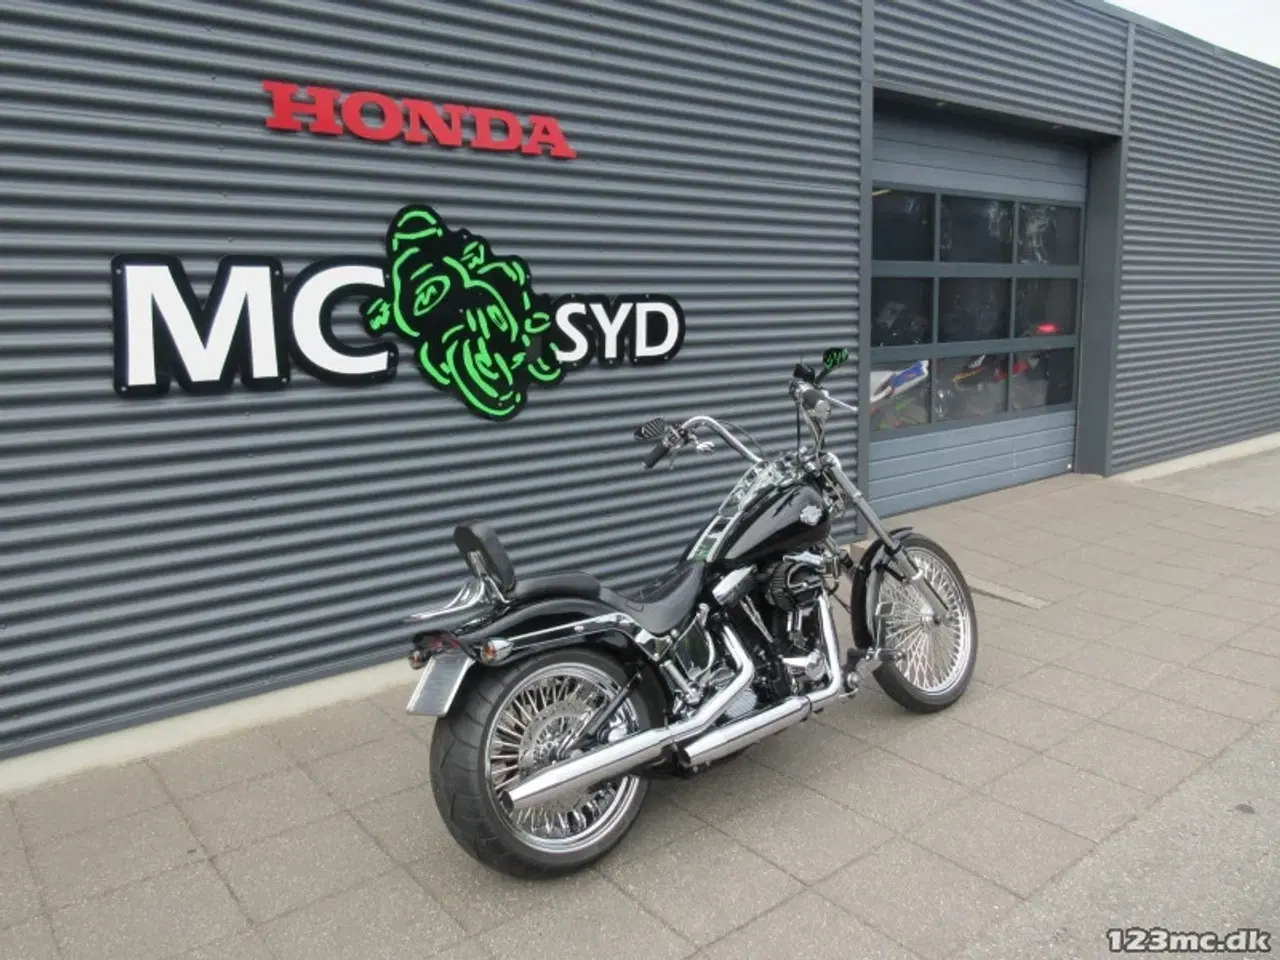 Billede 3 - Harley-Davidson FXSTC Softail Custom MC-SYD ENGROS /Bytter gerne